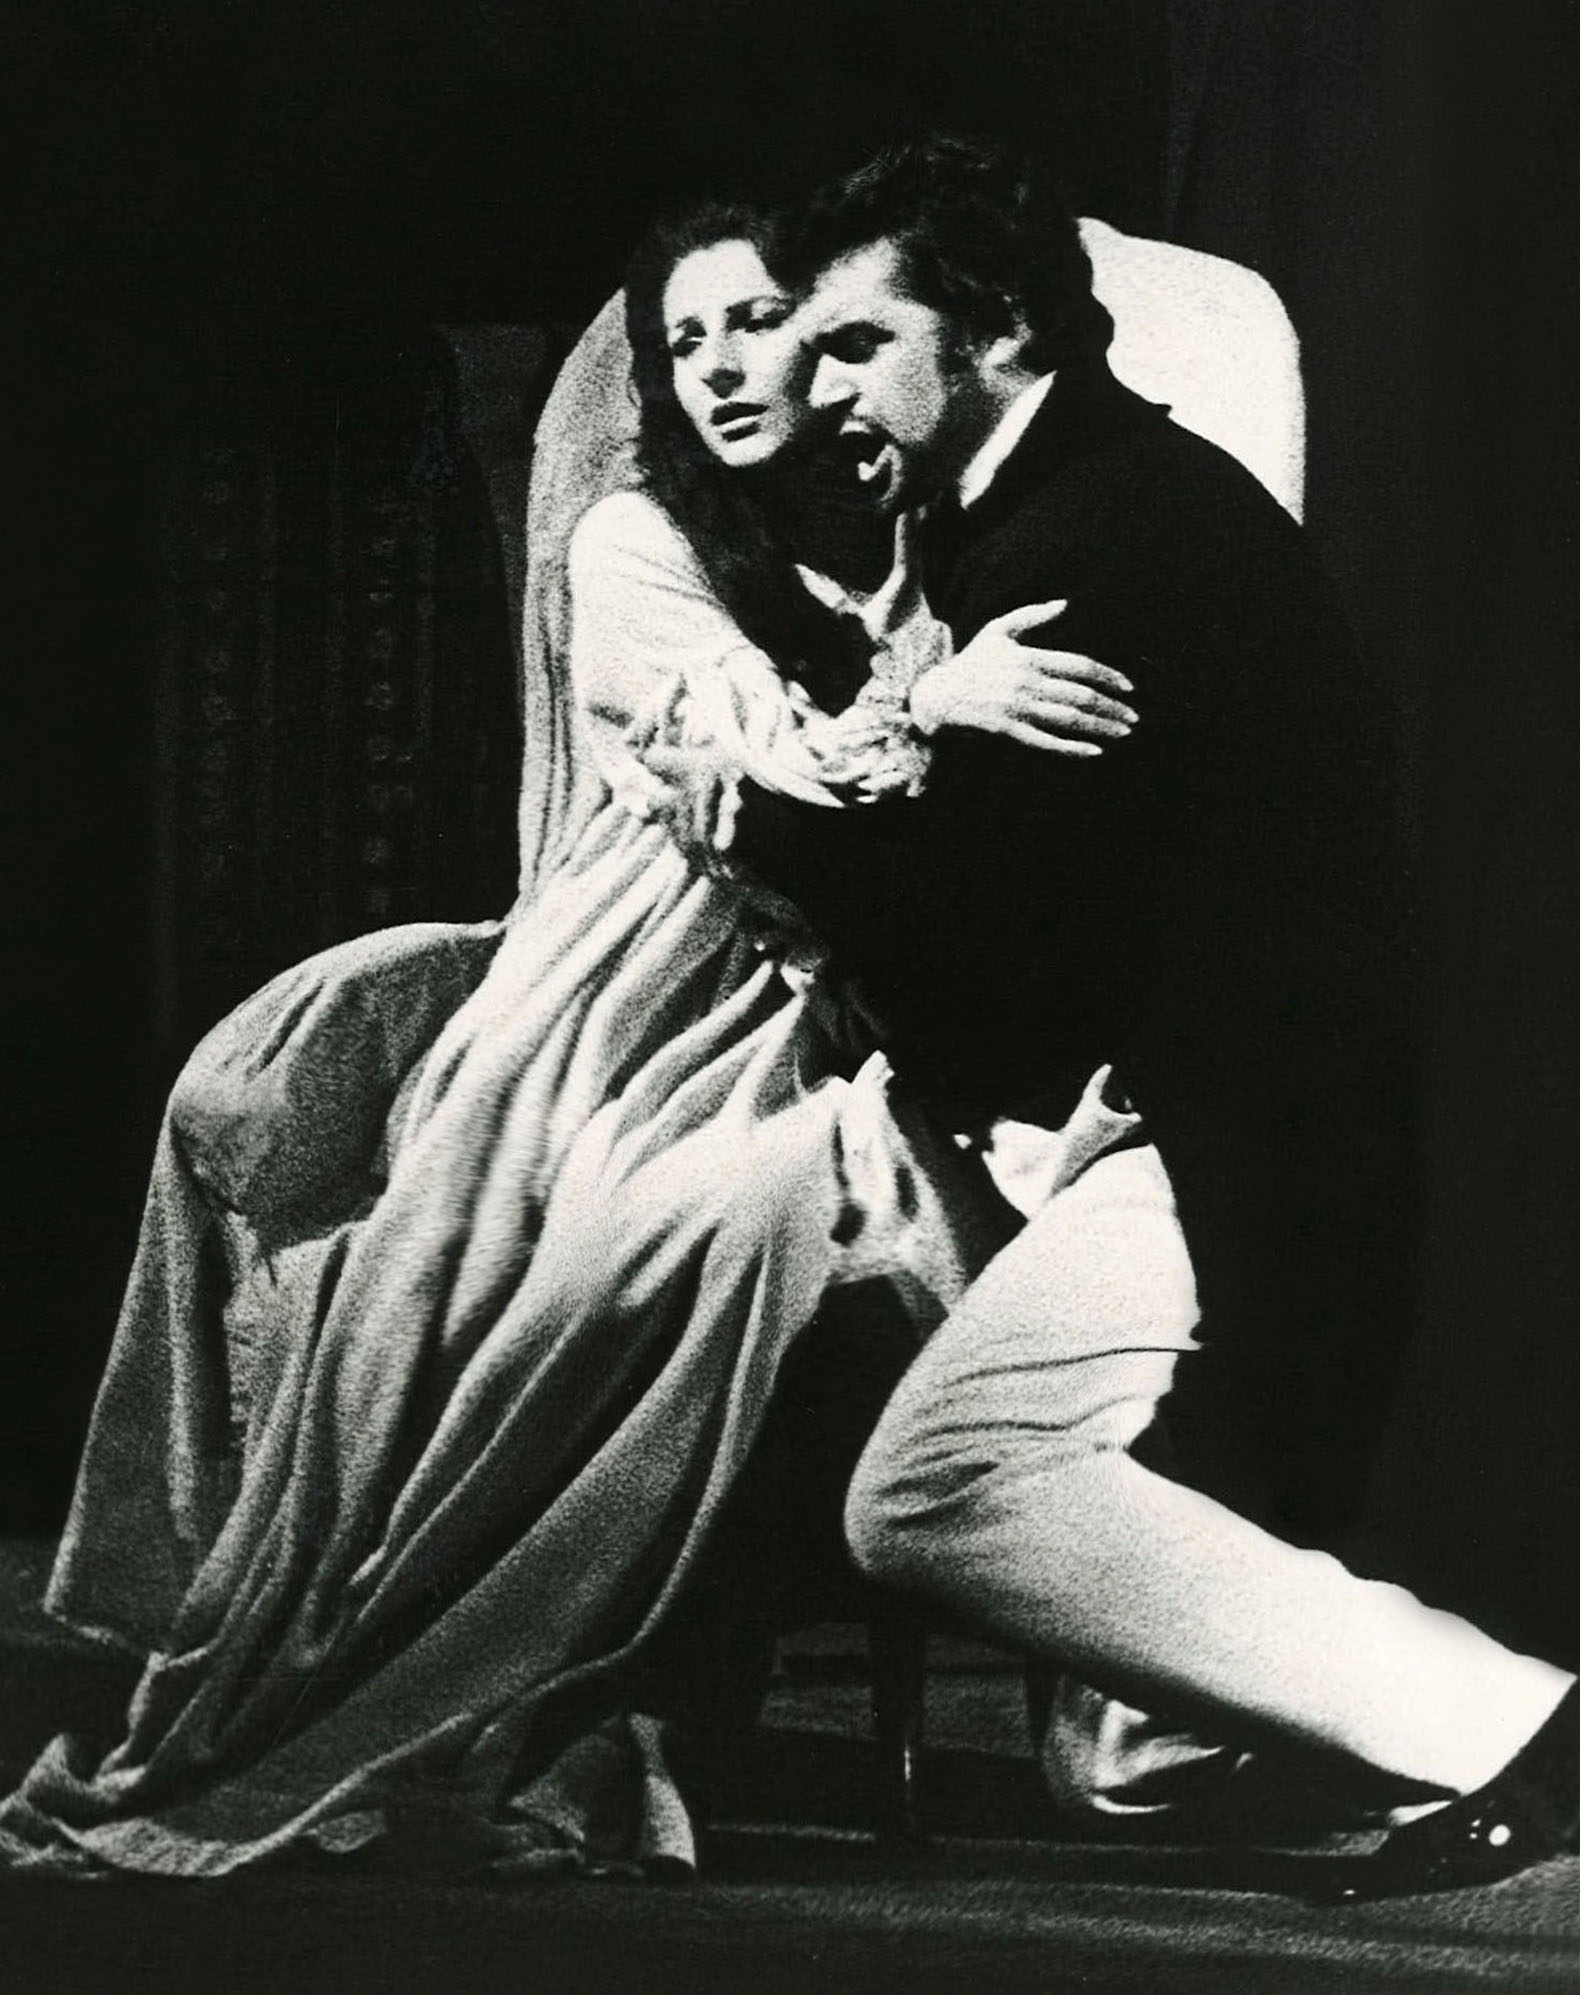 Lucia Aliberti with the Slovak tenor Peter Dvorsky⚘Opera⚘"La Traviata"⚘Deutsche Oper Berlin⚘Berlin⚘On Stage⚘Photo taken from the TV News⚘TV Portrait⚘:http://www.luciaaliberti.it #luciaaliberti #peterdvorsky #deutscheoperberlin #berlin #latraviata  #opera #onstage #tvnews #tvportrait